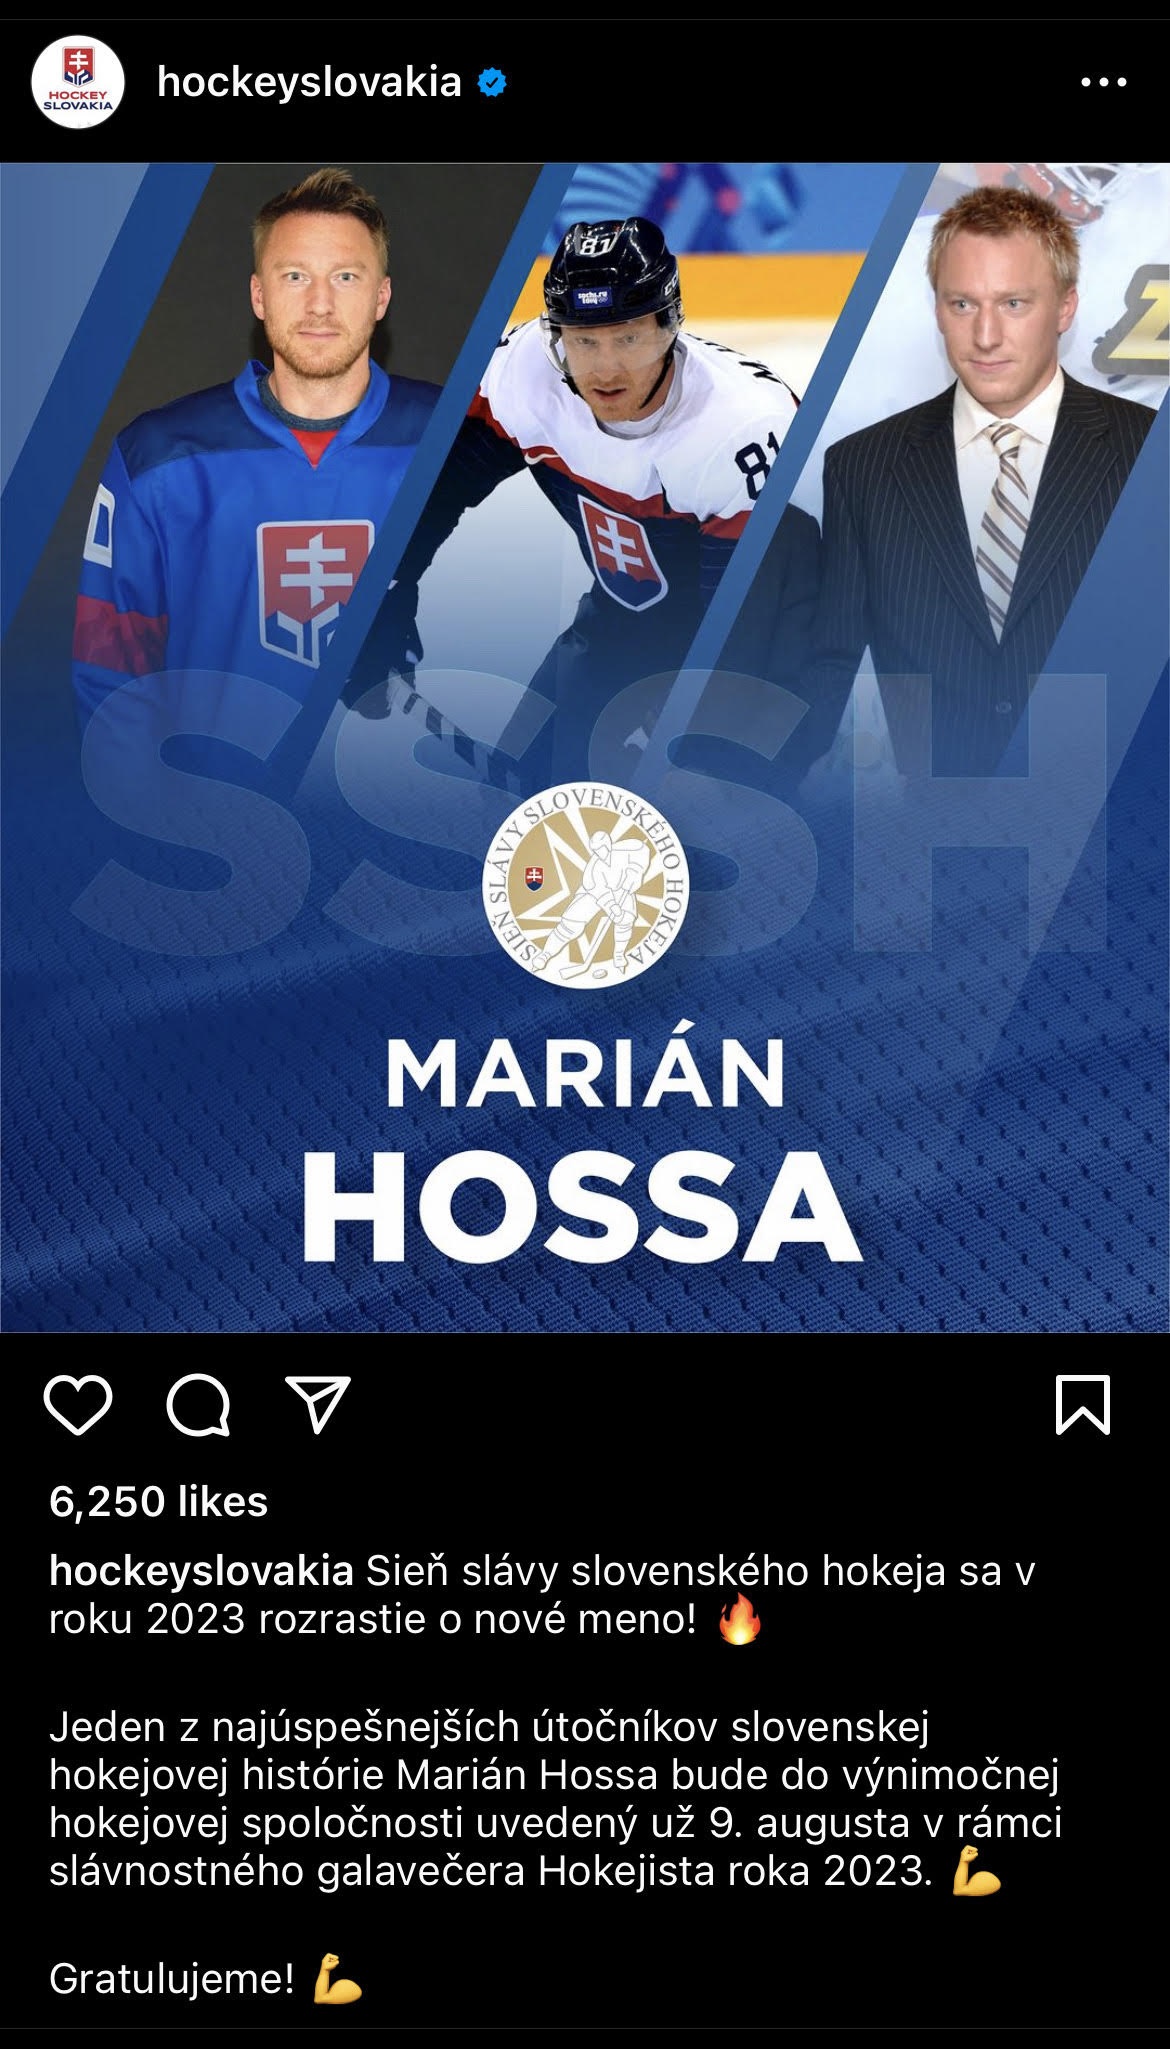 Is Marian Hossa a Hall of Famer?